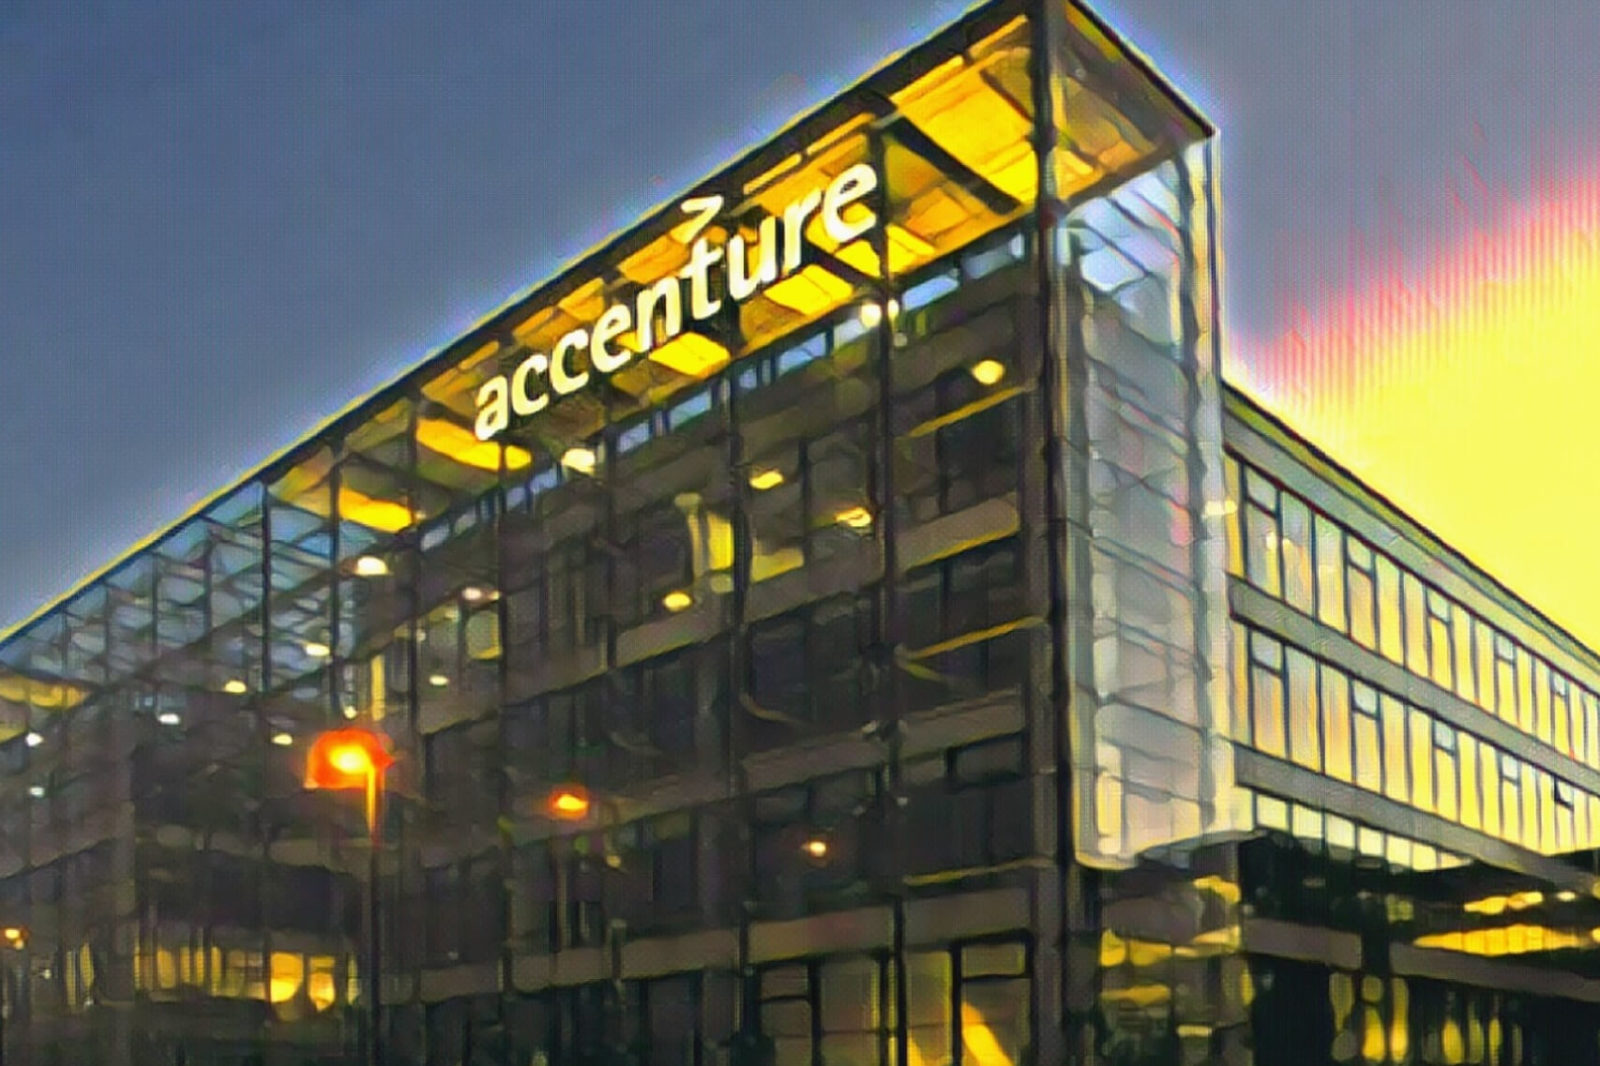 Accenture u s headquarters nuance salma hayek eye serum